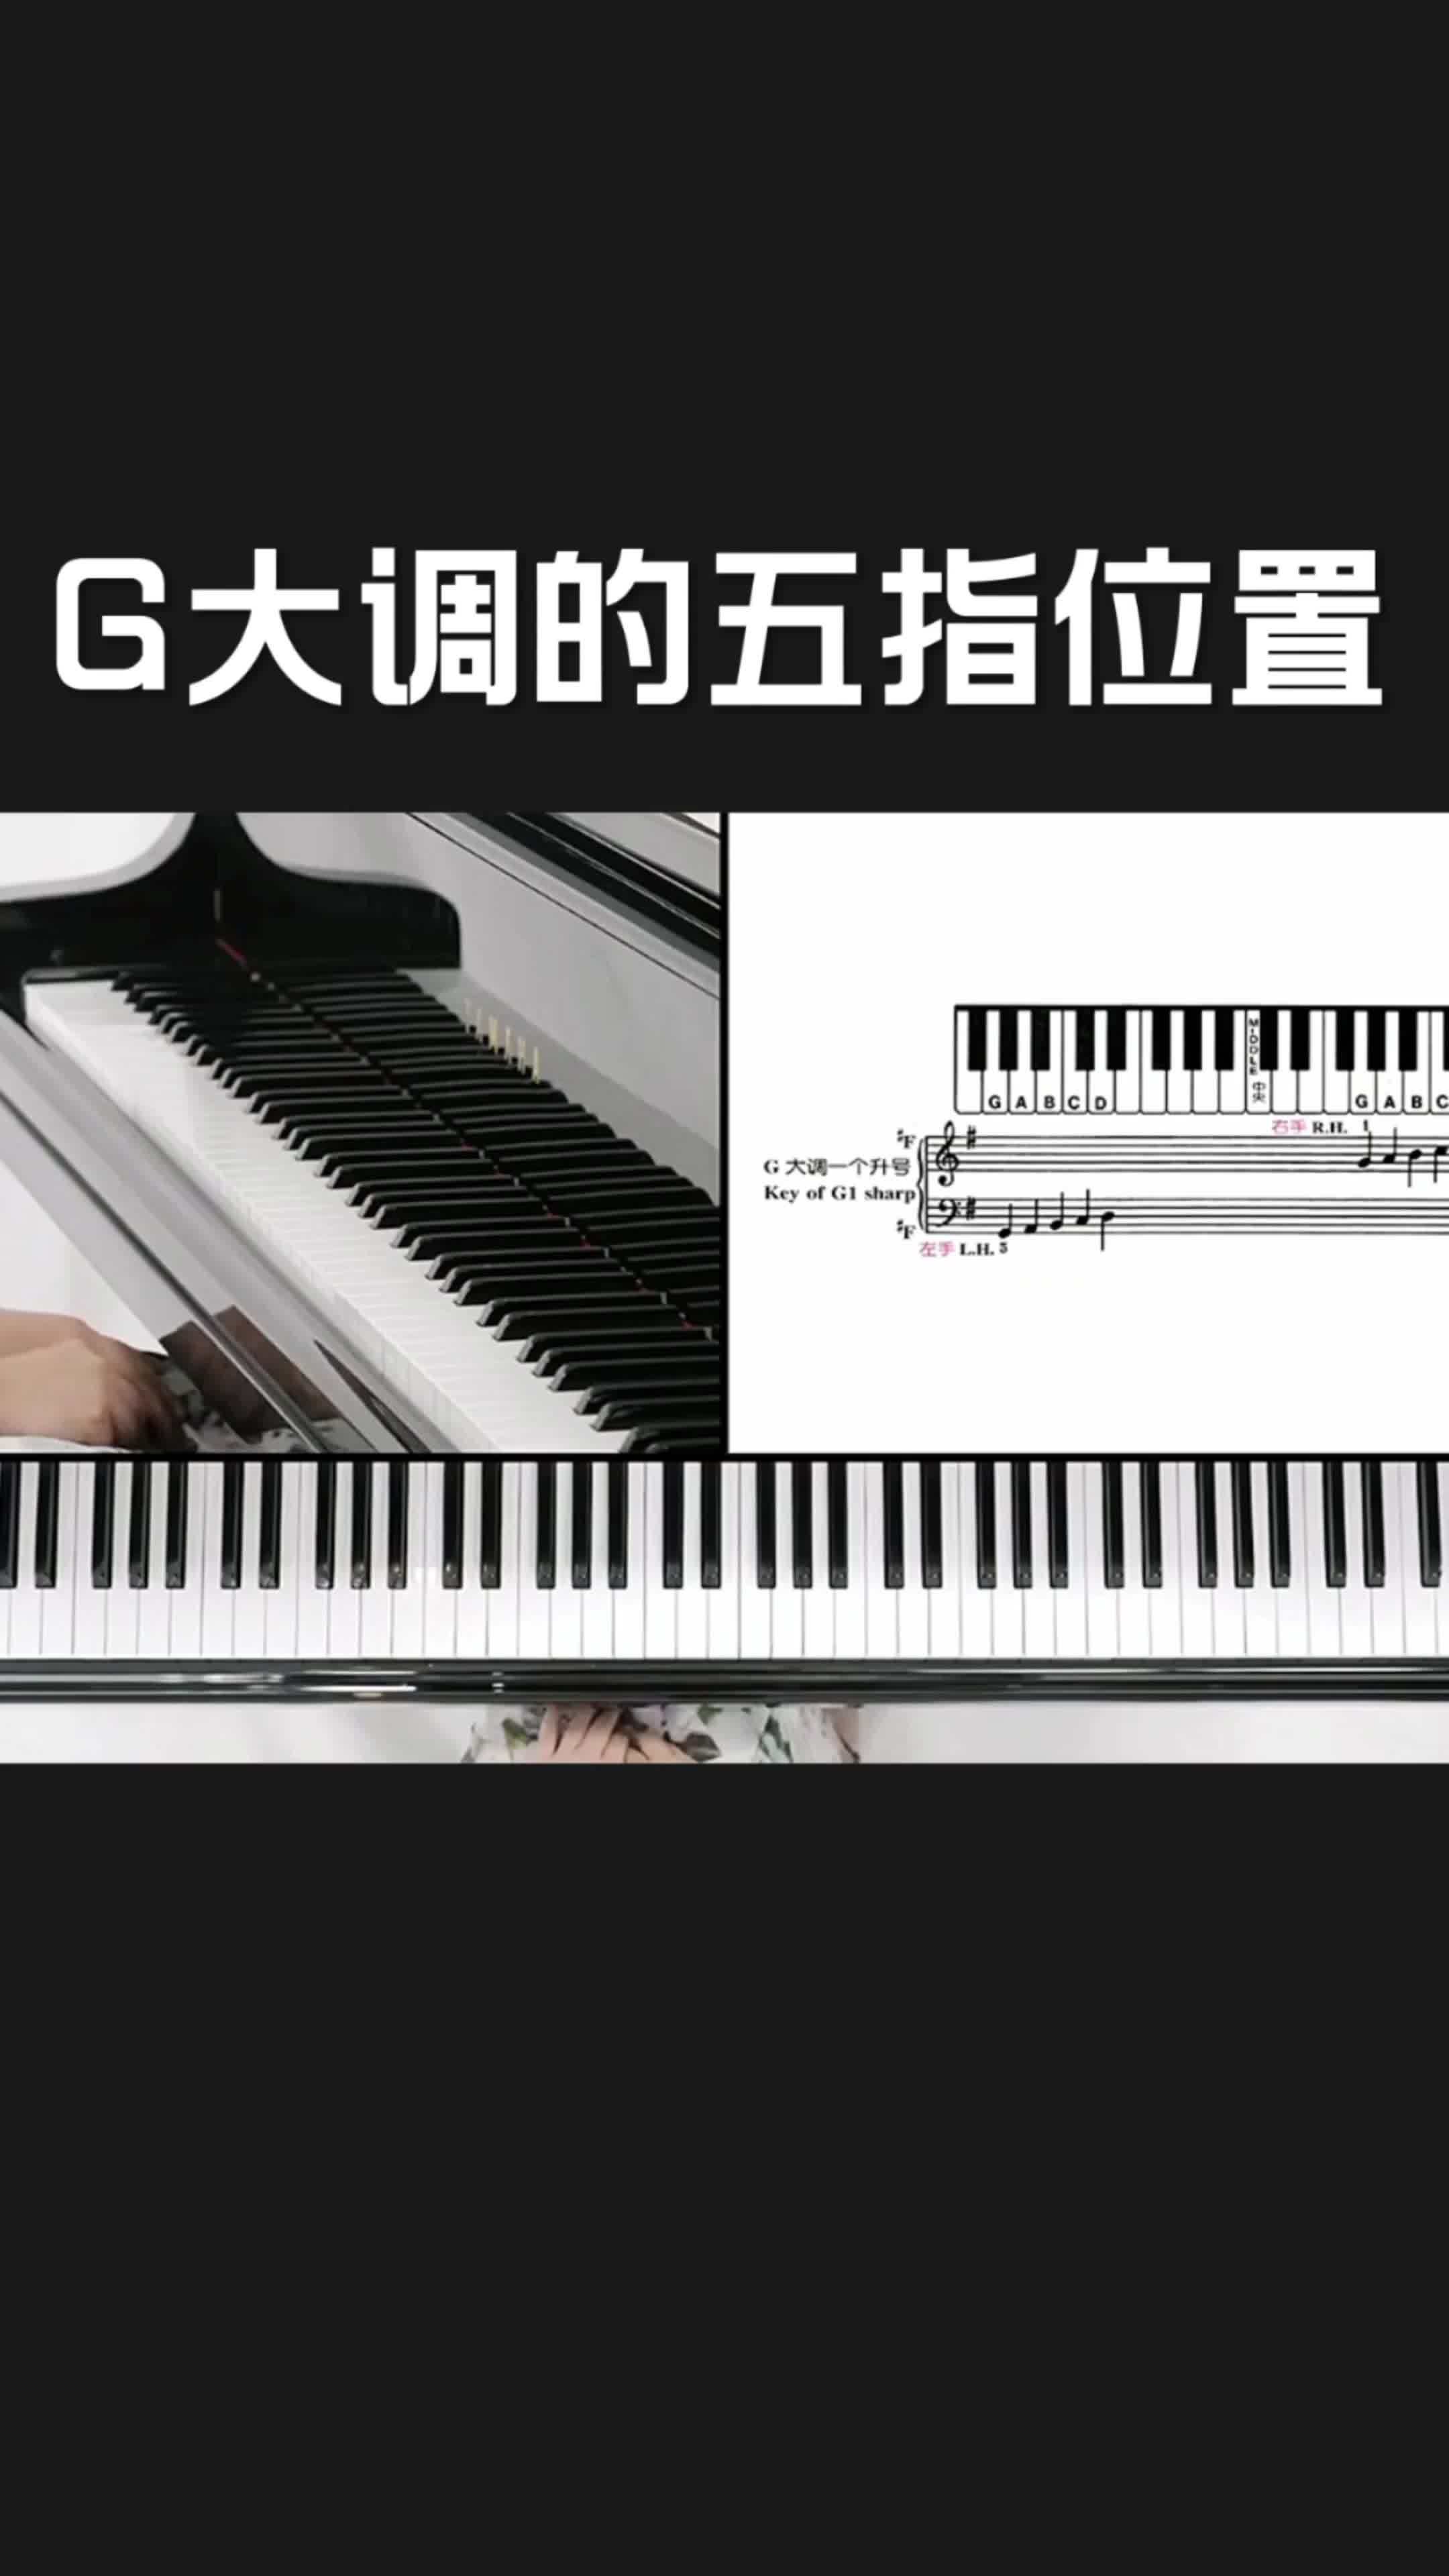 g大调的五指位置 钢琴启蒙 巴斯蒂安 零基础钢琴教学 钢琴教学 琴童